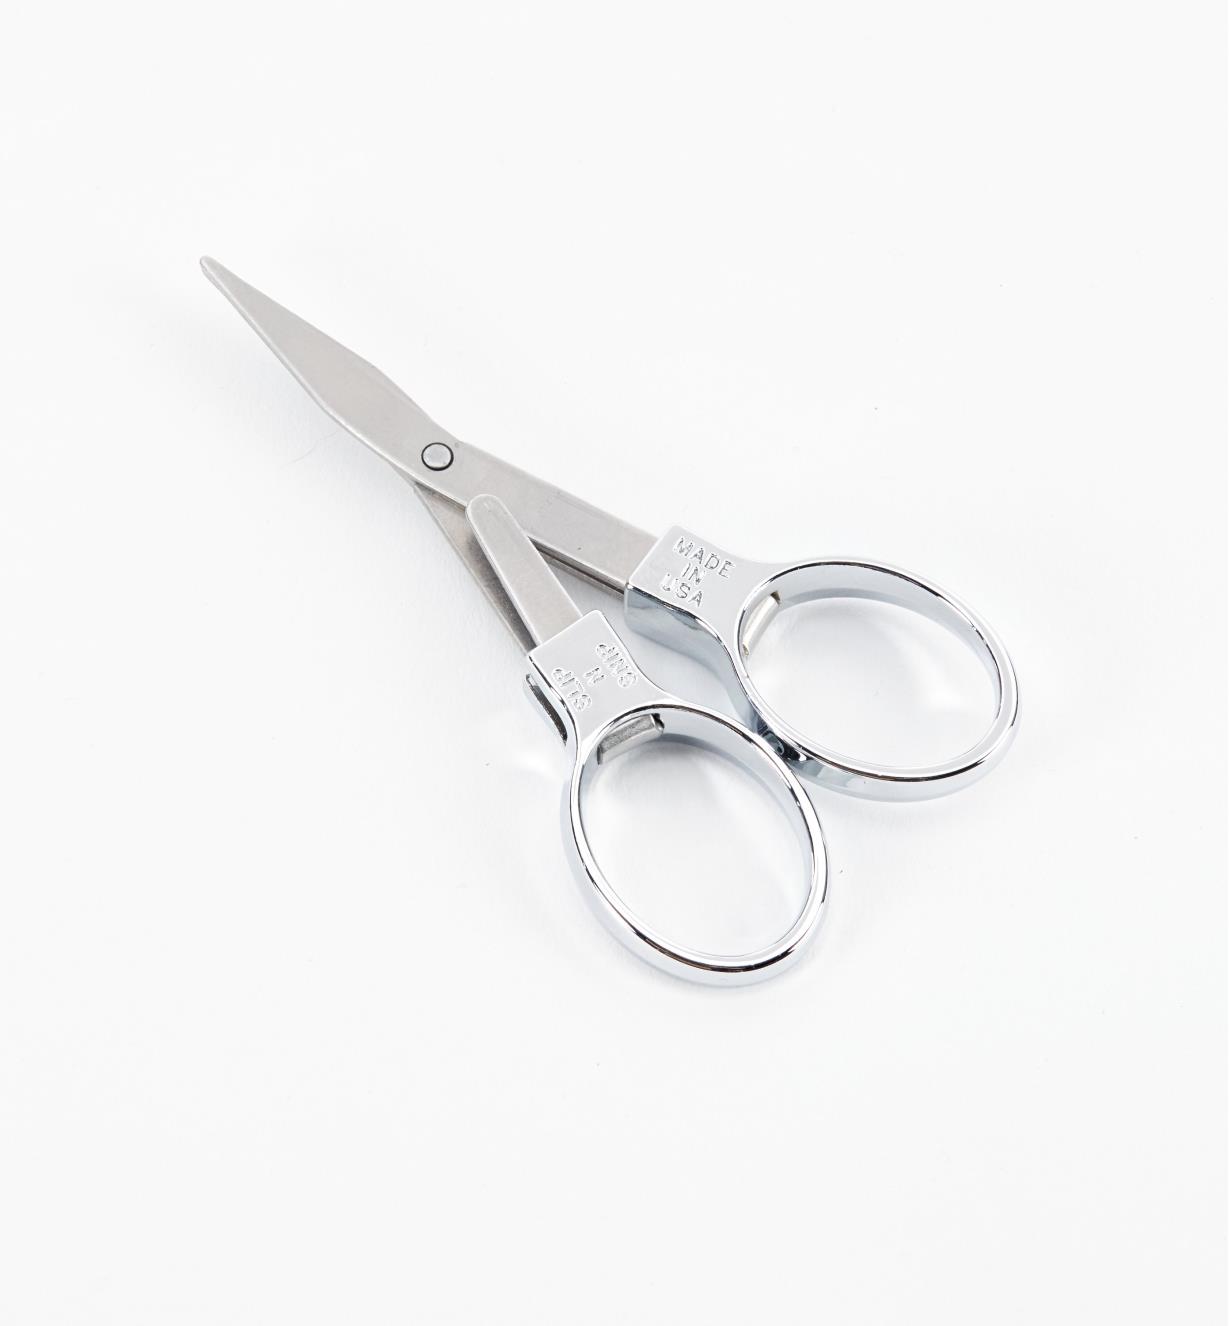 AB532 - Folding Scissors, each